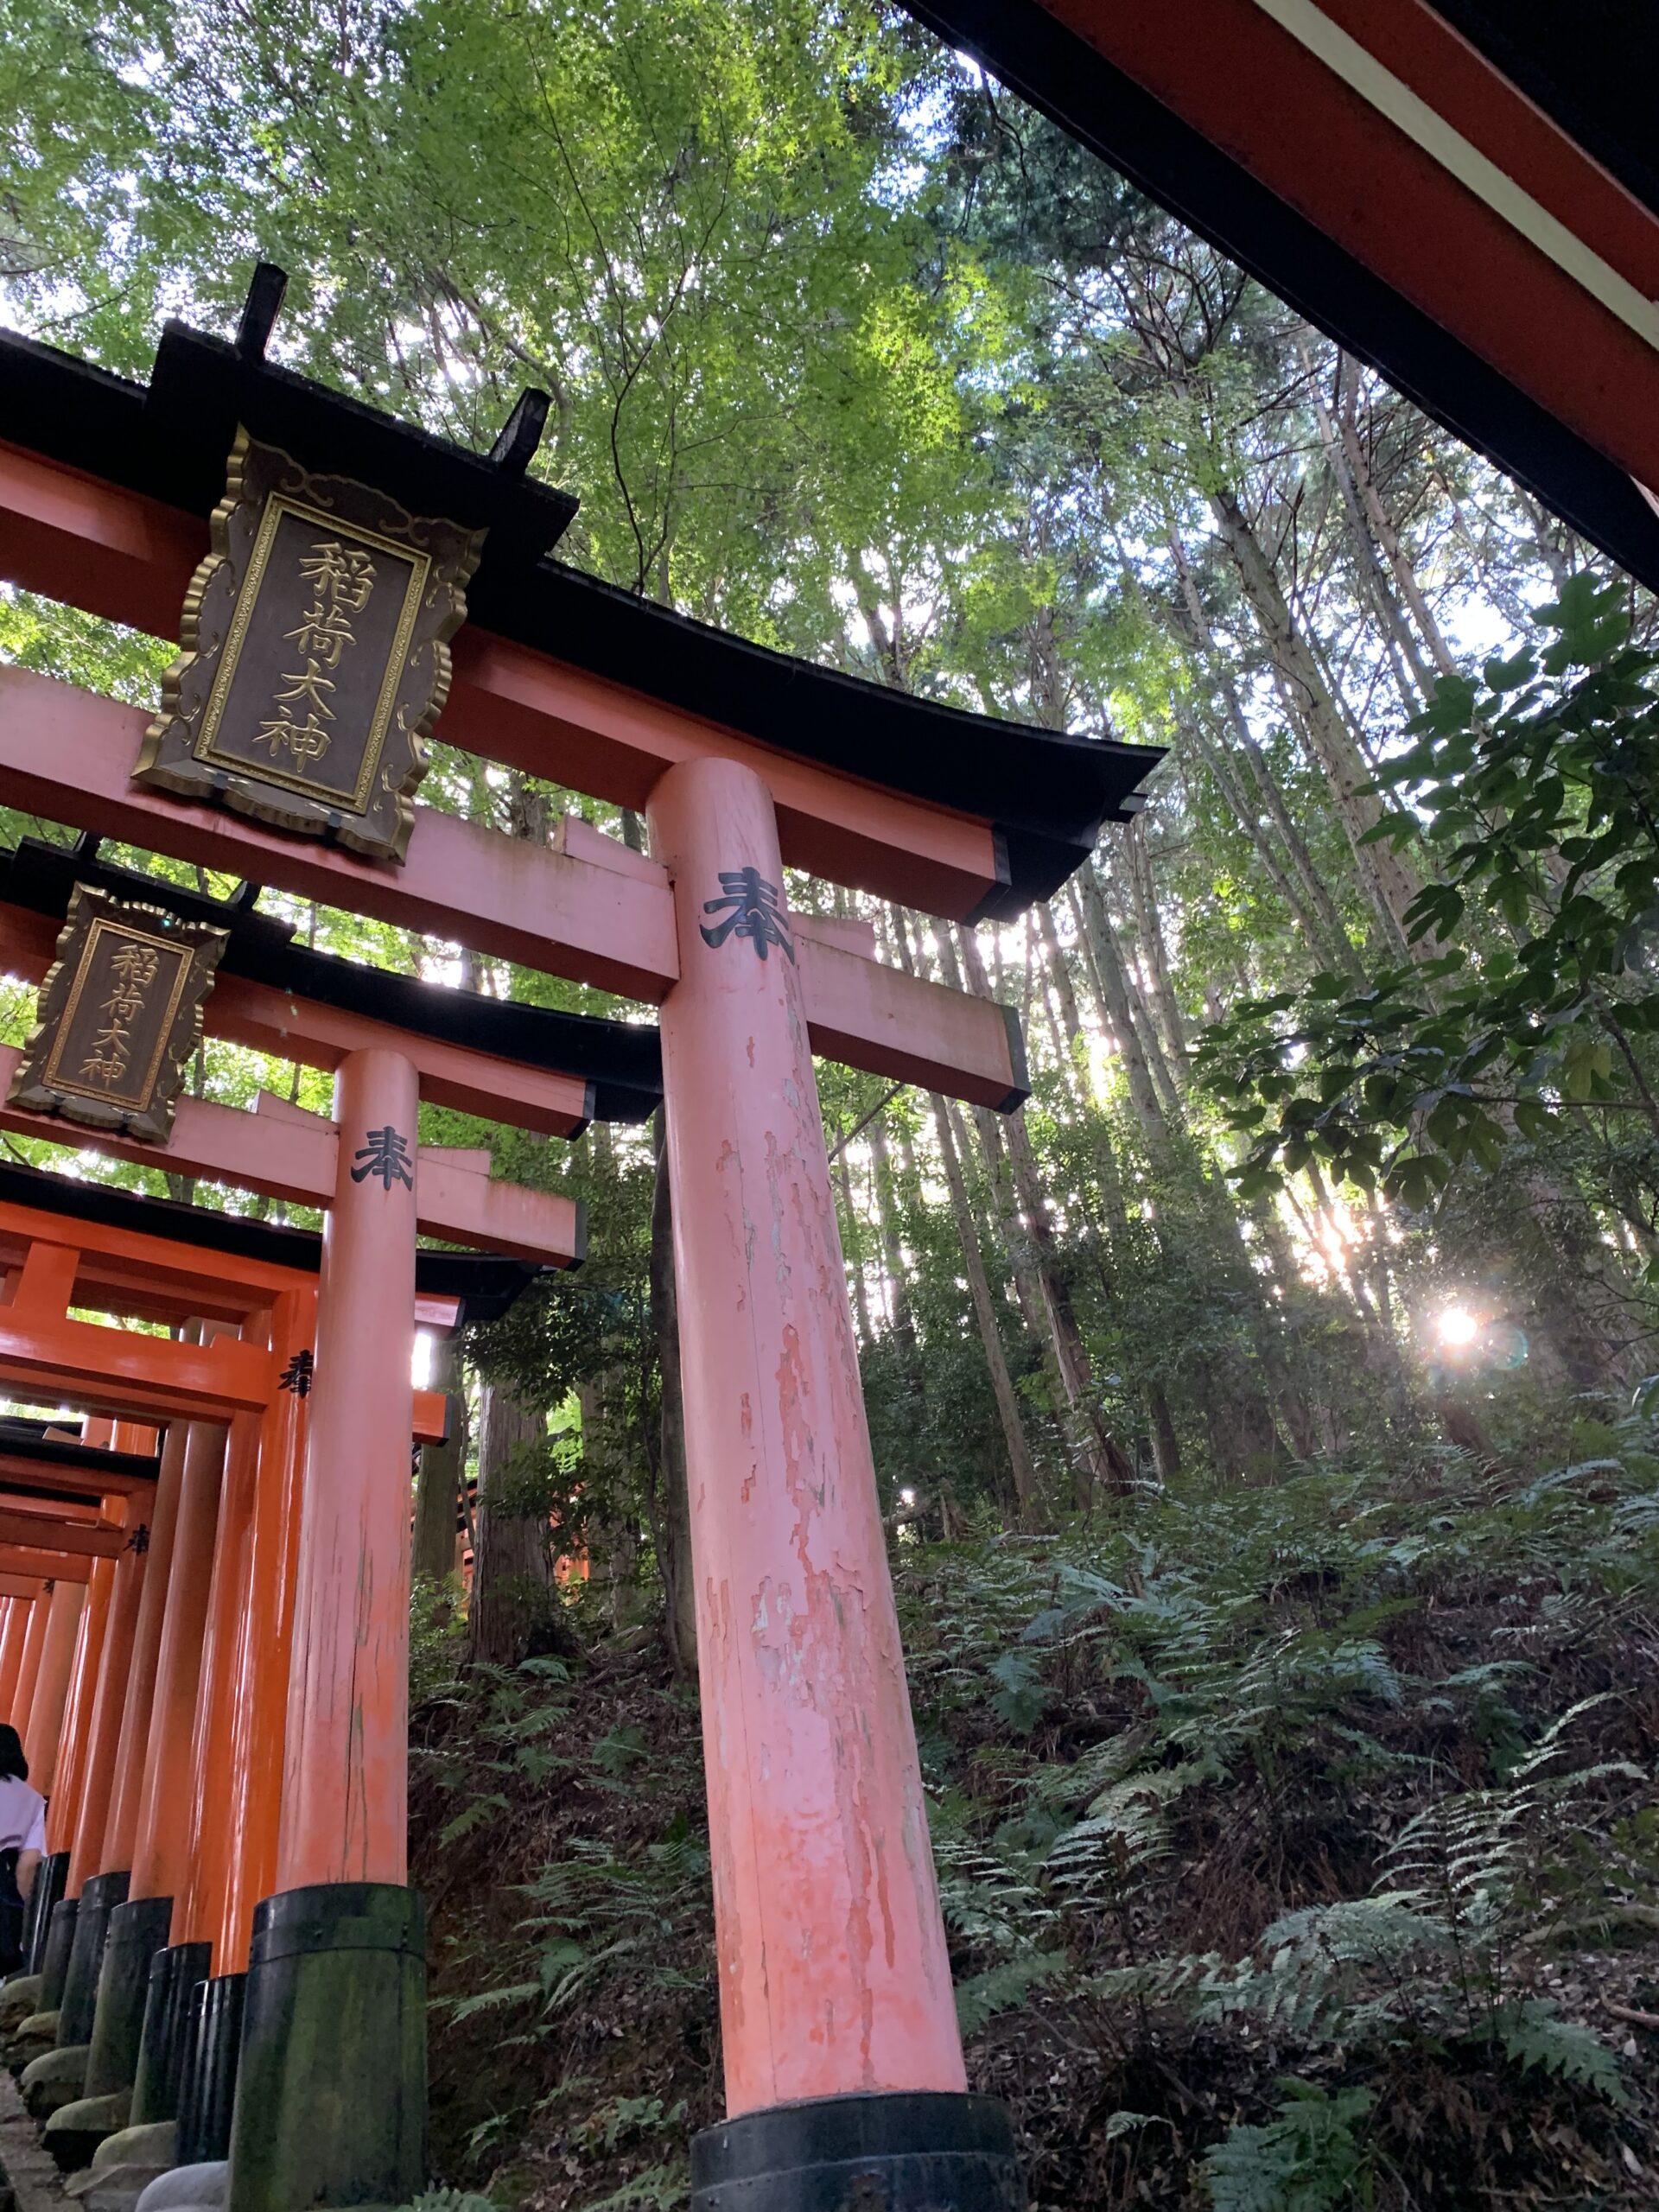 Paths of Fushimi Inari Taisha